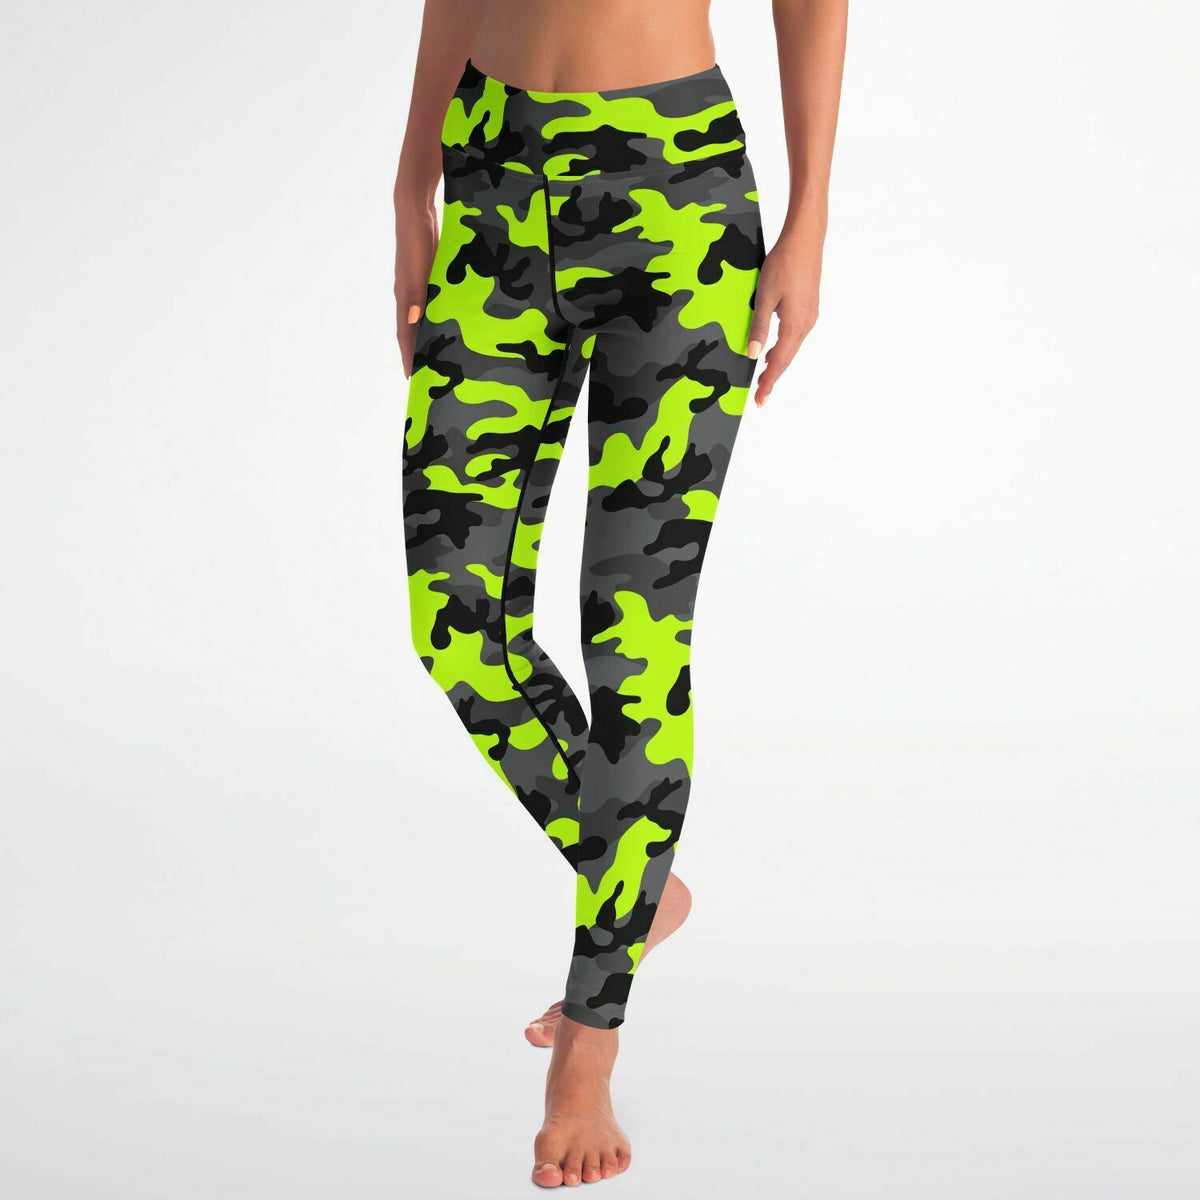 Green Galaxy - Women's Casual Leggings - Cameron Creations Ltd.